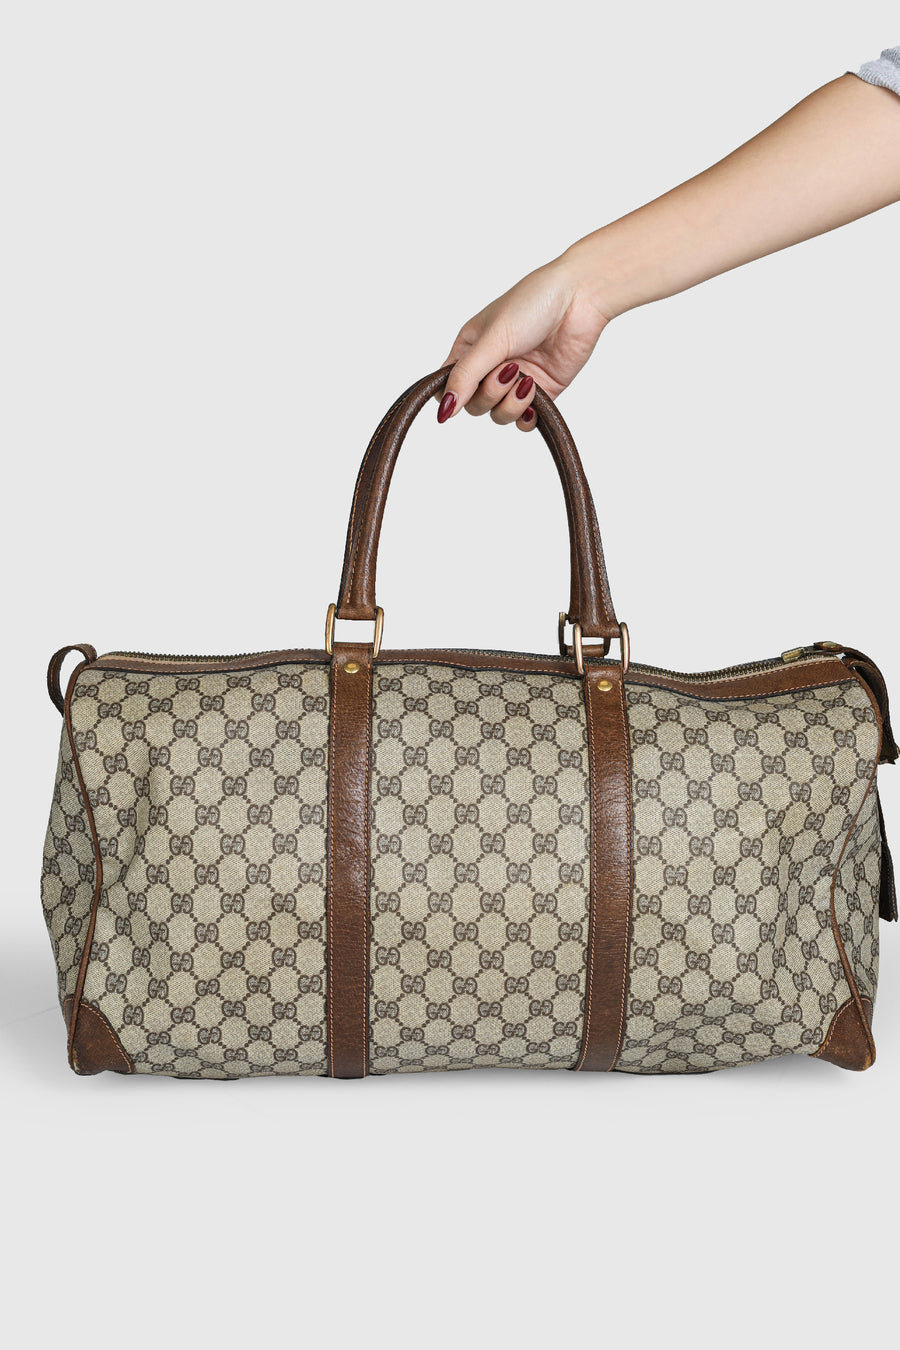 GG Supreme duffle - Gucci Men's Duffle Bags 406380KHN7N9772 | Bags, Gucci  travel bag, Designer duffle bags